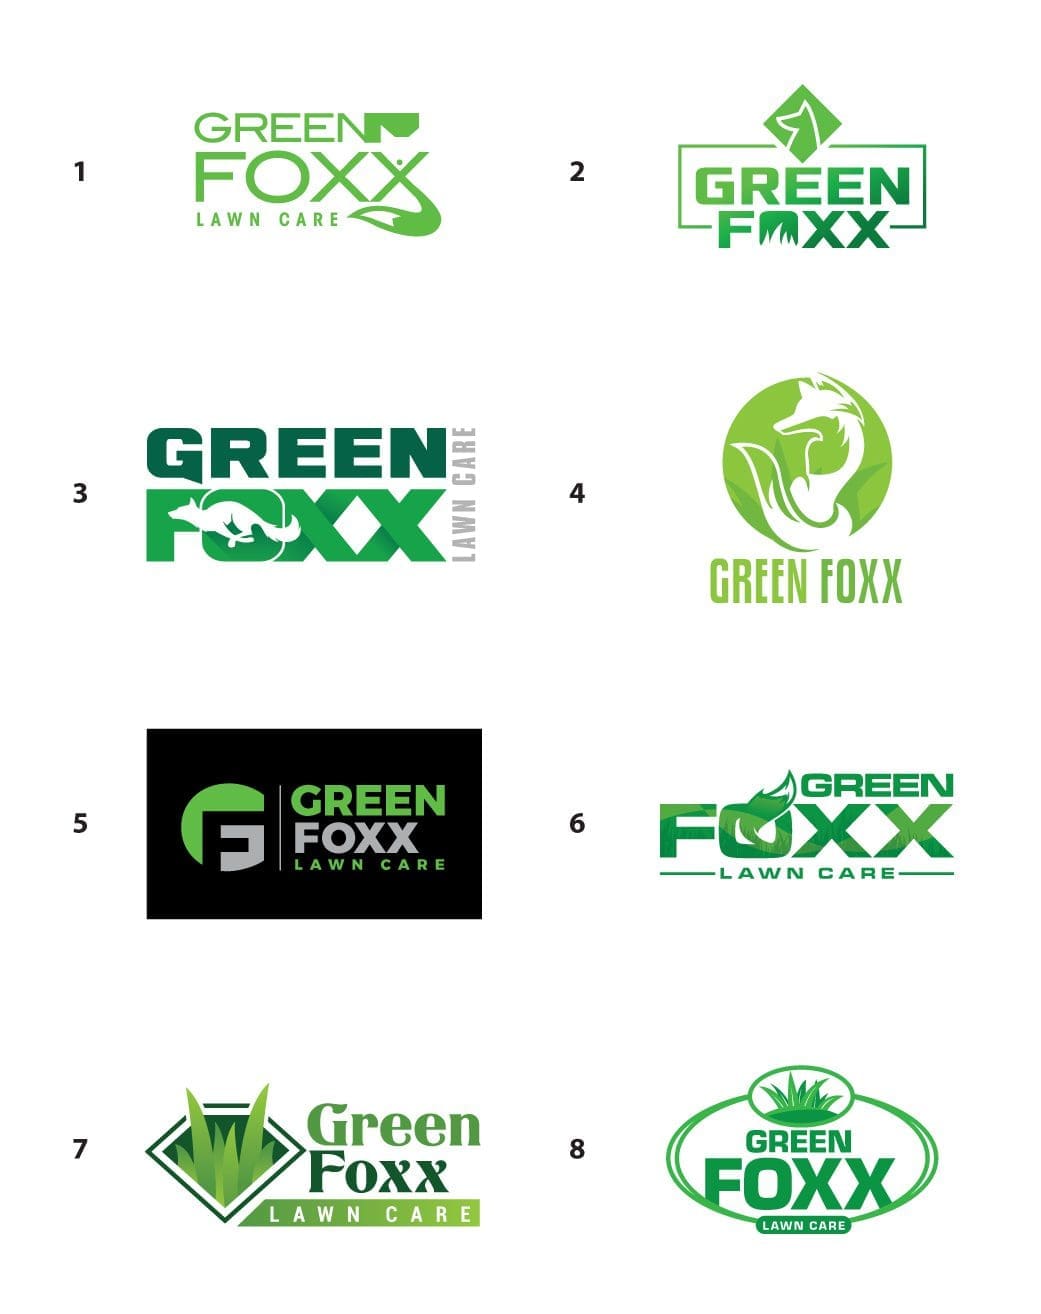 Green Foxx Lawn Care Logo - Concepts